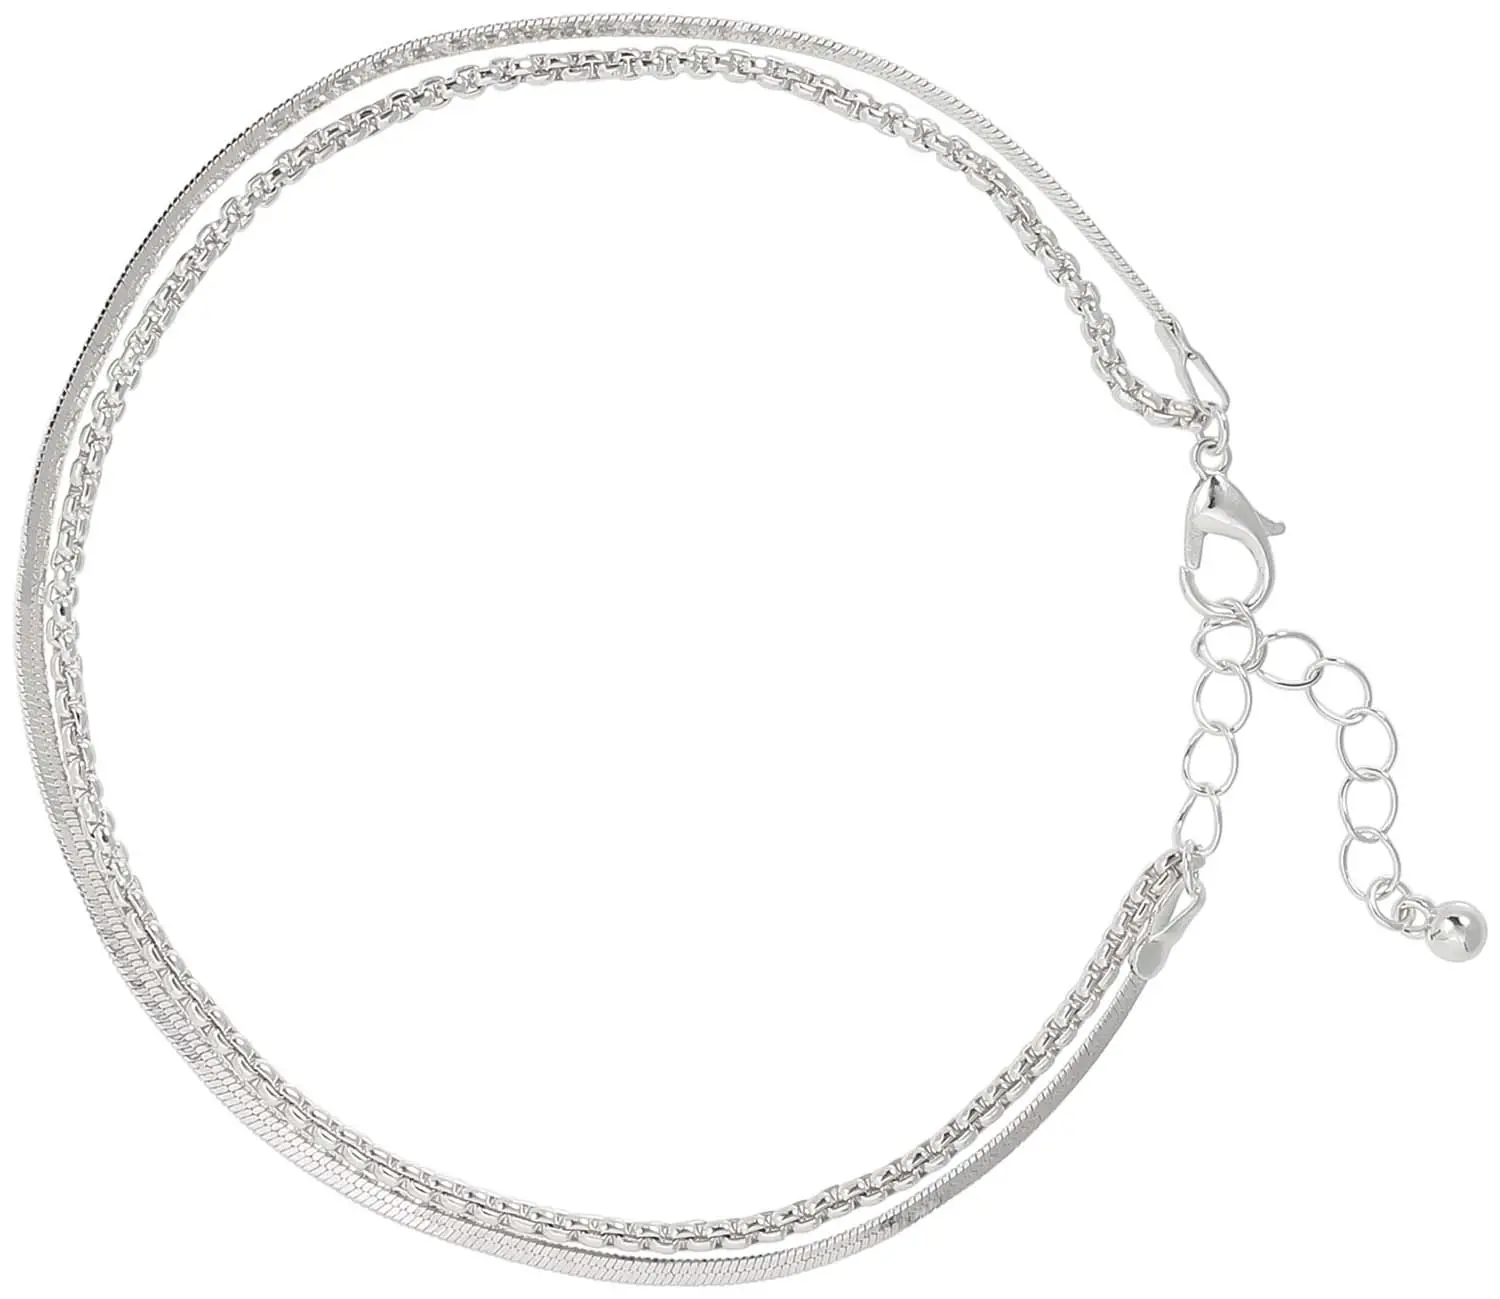 Bracelet de cheville - Silver Gleam